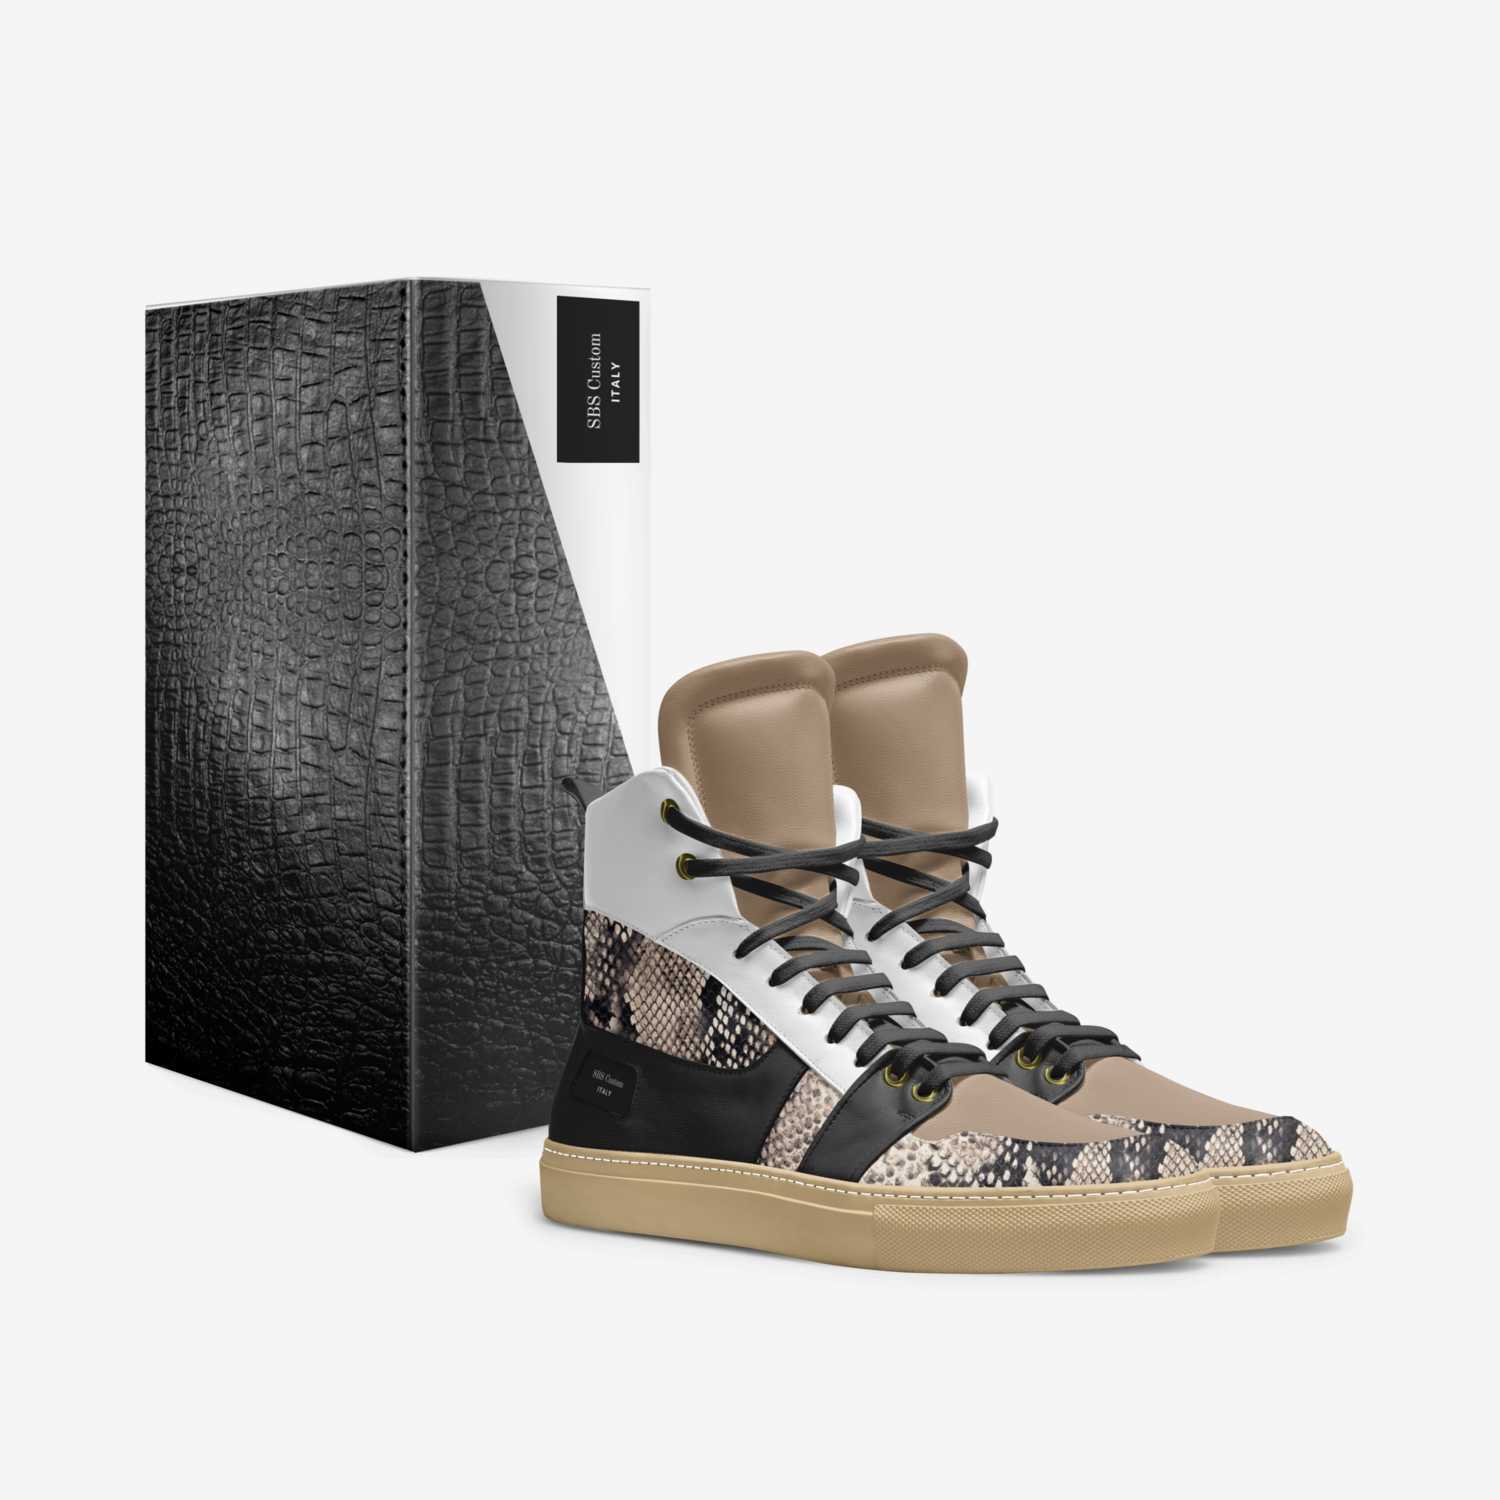 SBS Custom custom made in Italy shoes by Sacha Raeburn | Box view